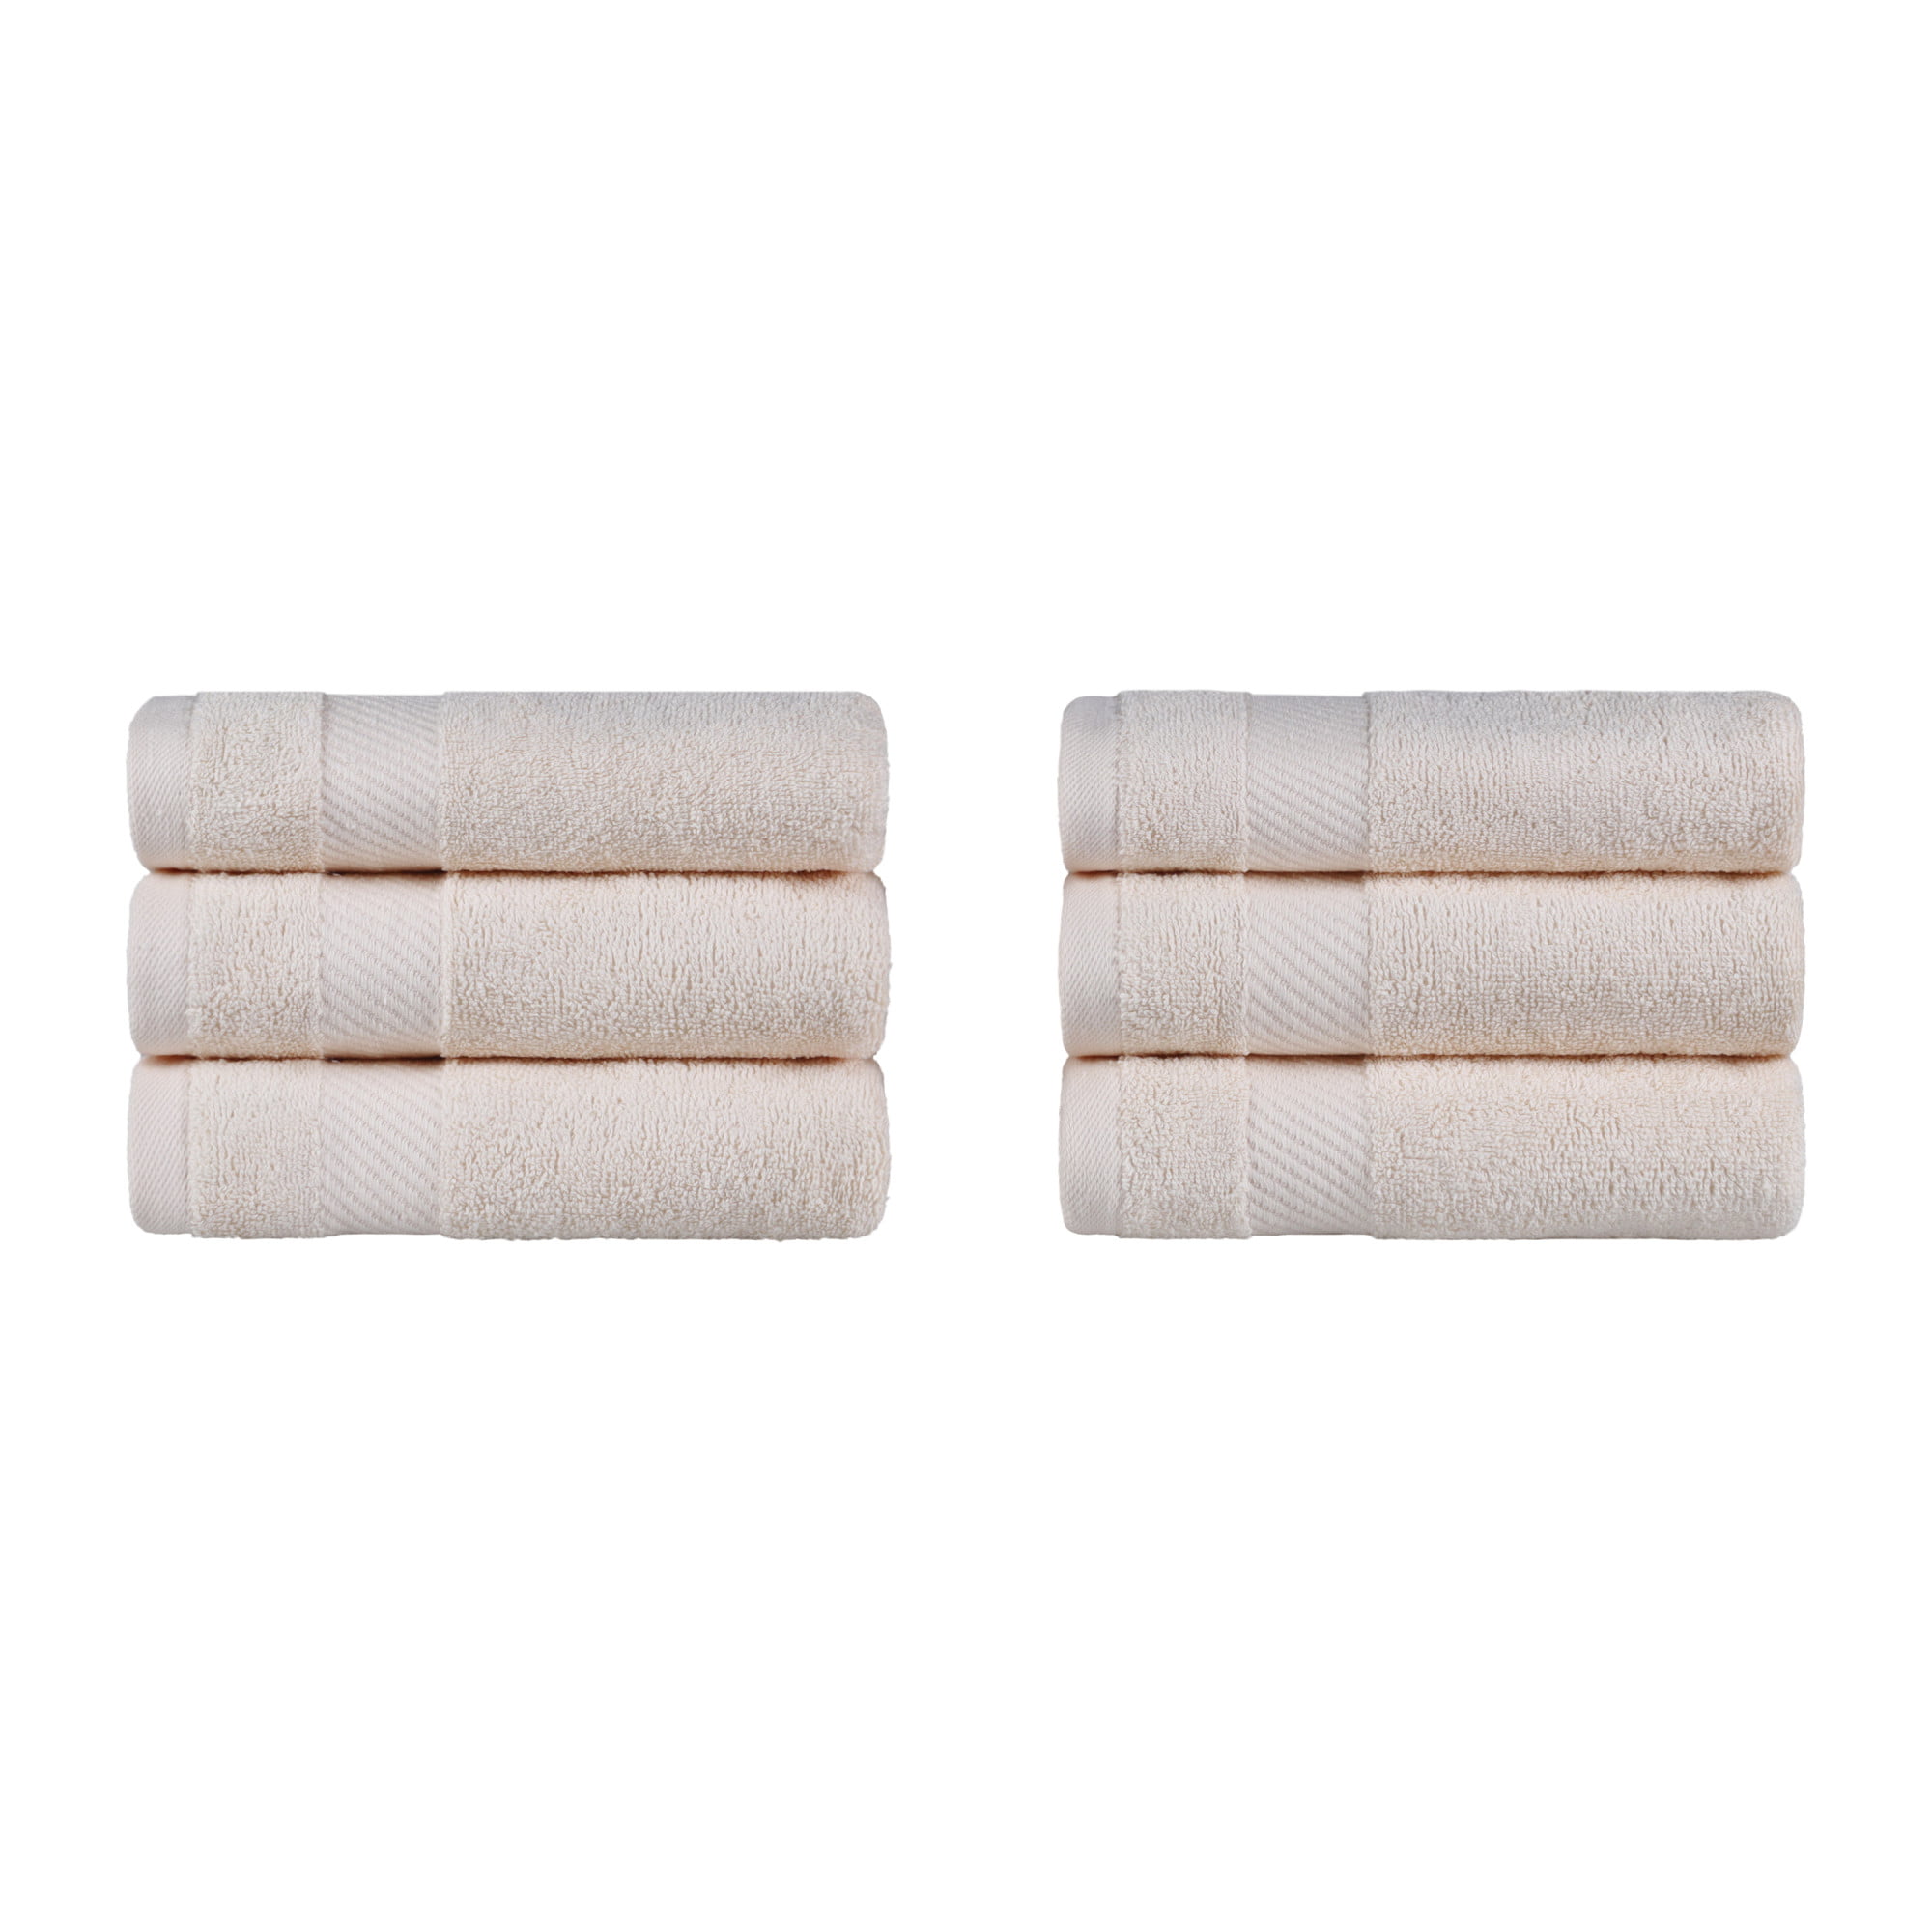 4 pack Bath Sheet, Aqua 100% Egyptian Cotton Extra Soft Luxurious Hampton Bath Towels High Absorbent Machine Washable. 